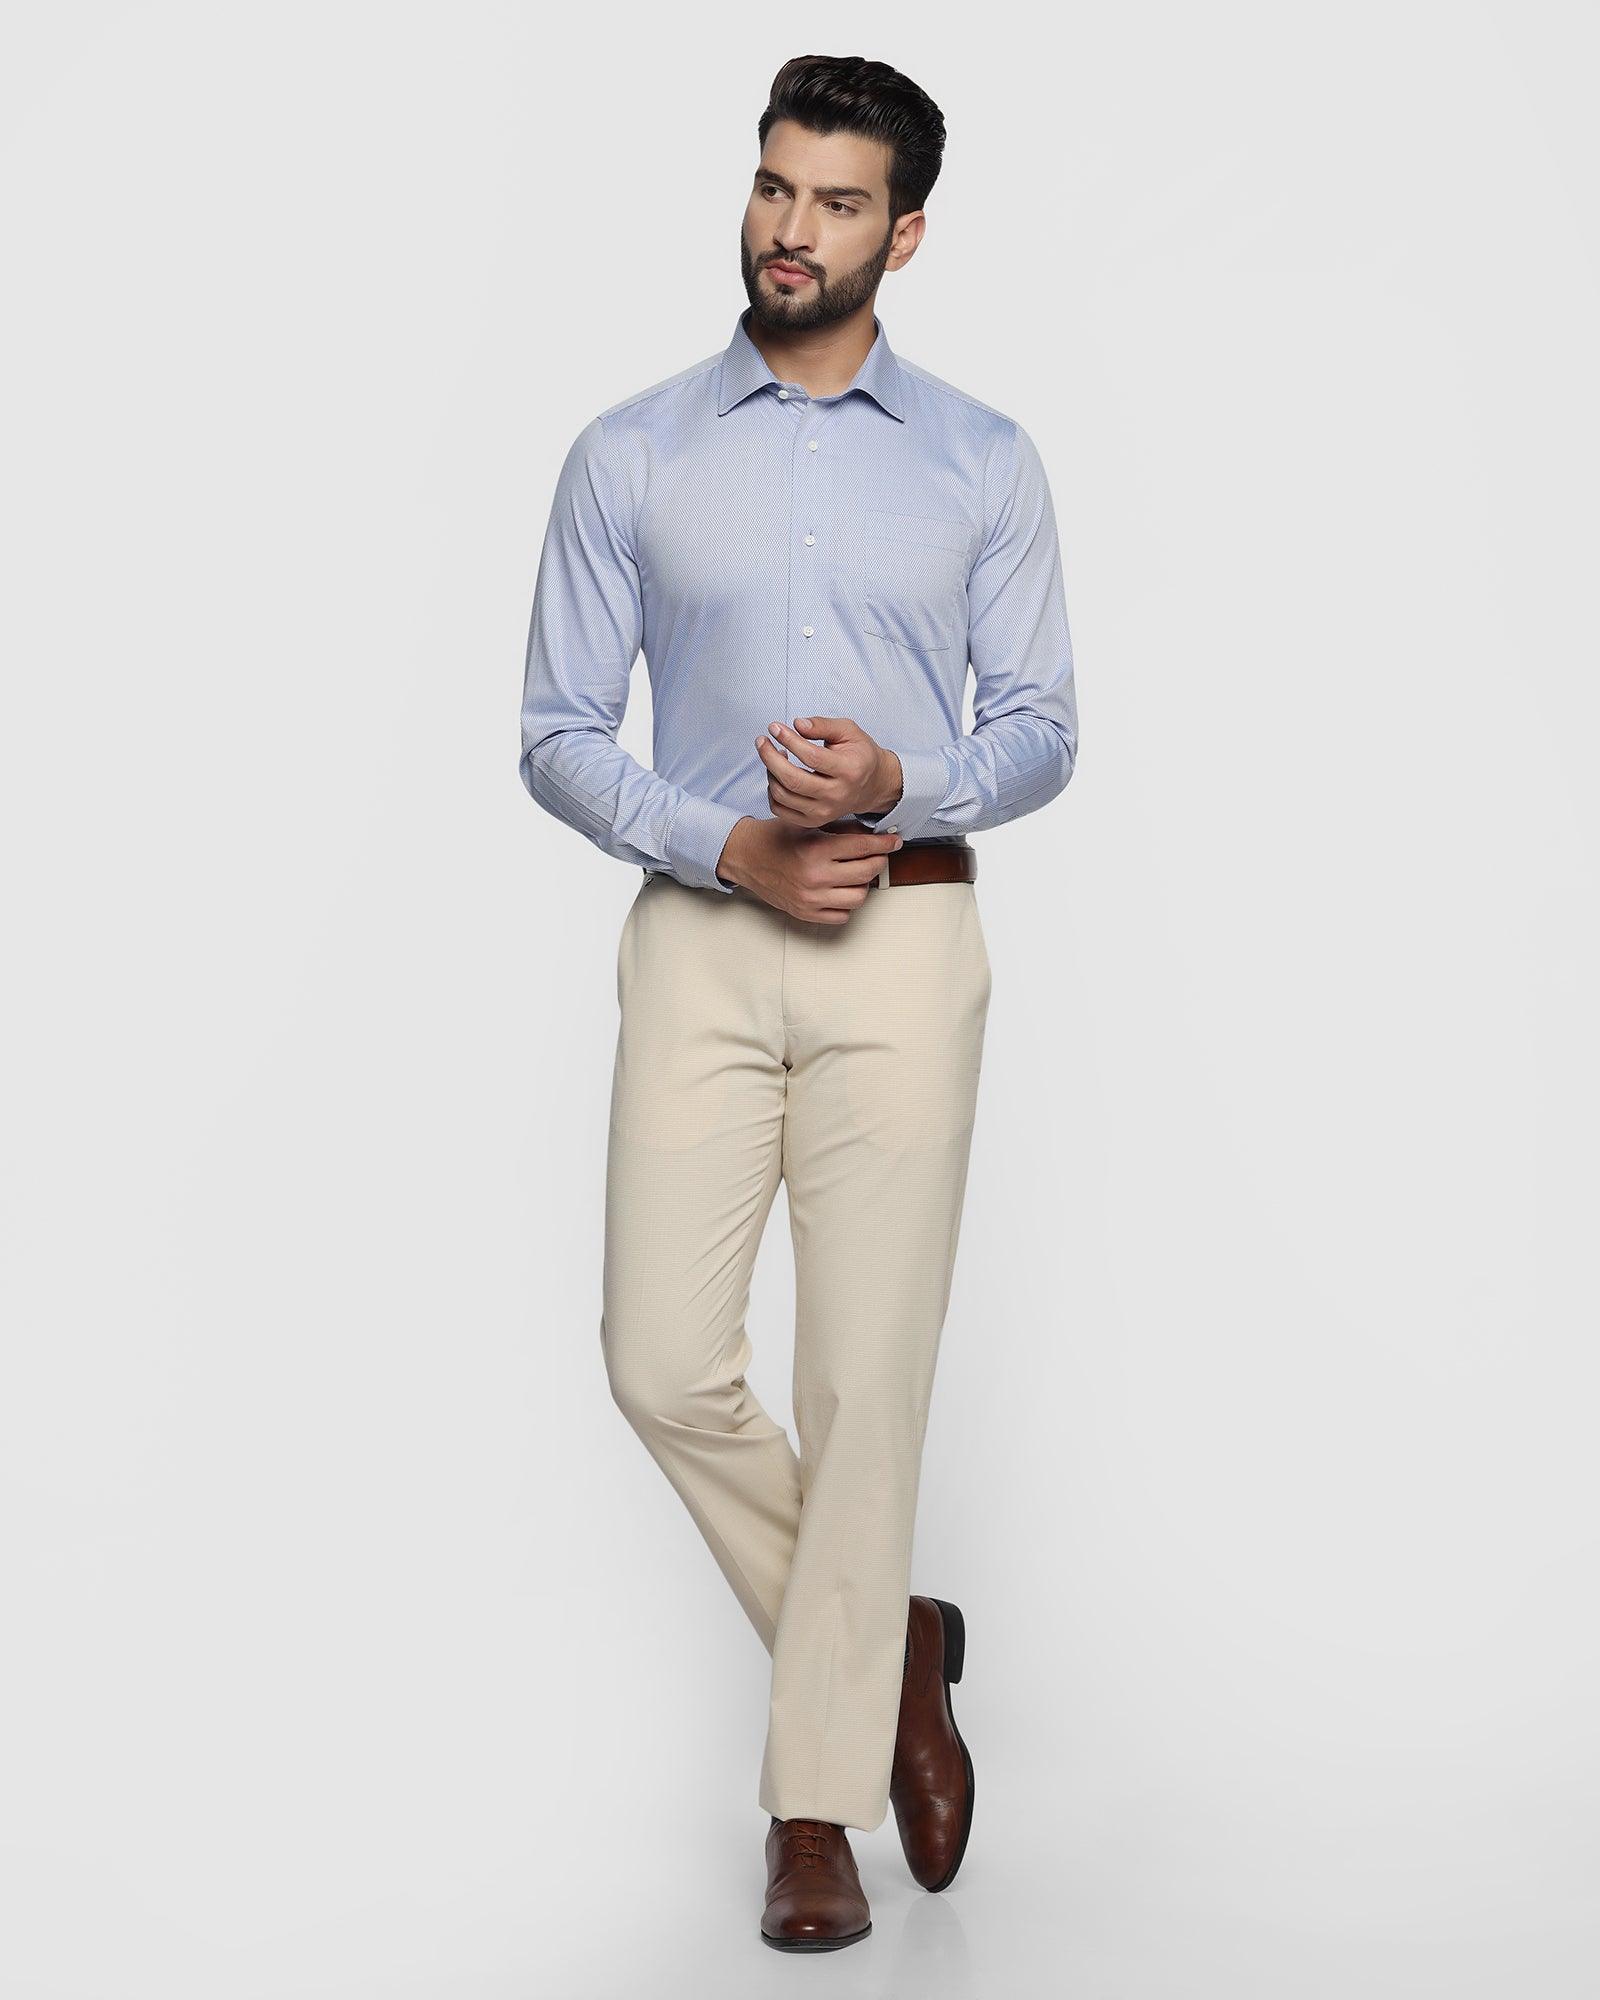 Formal Blue Textured Shirt - Verno